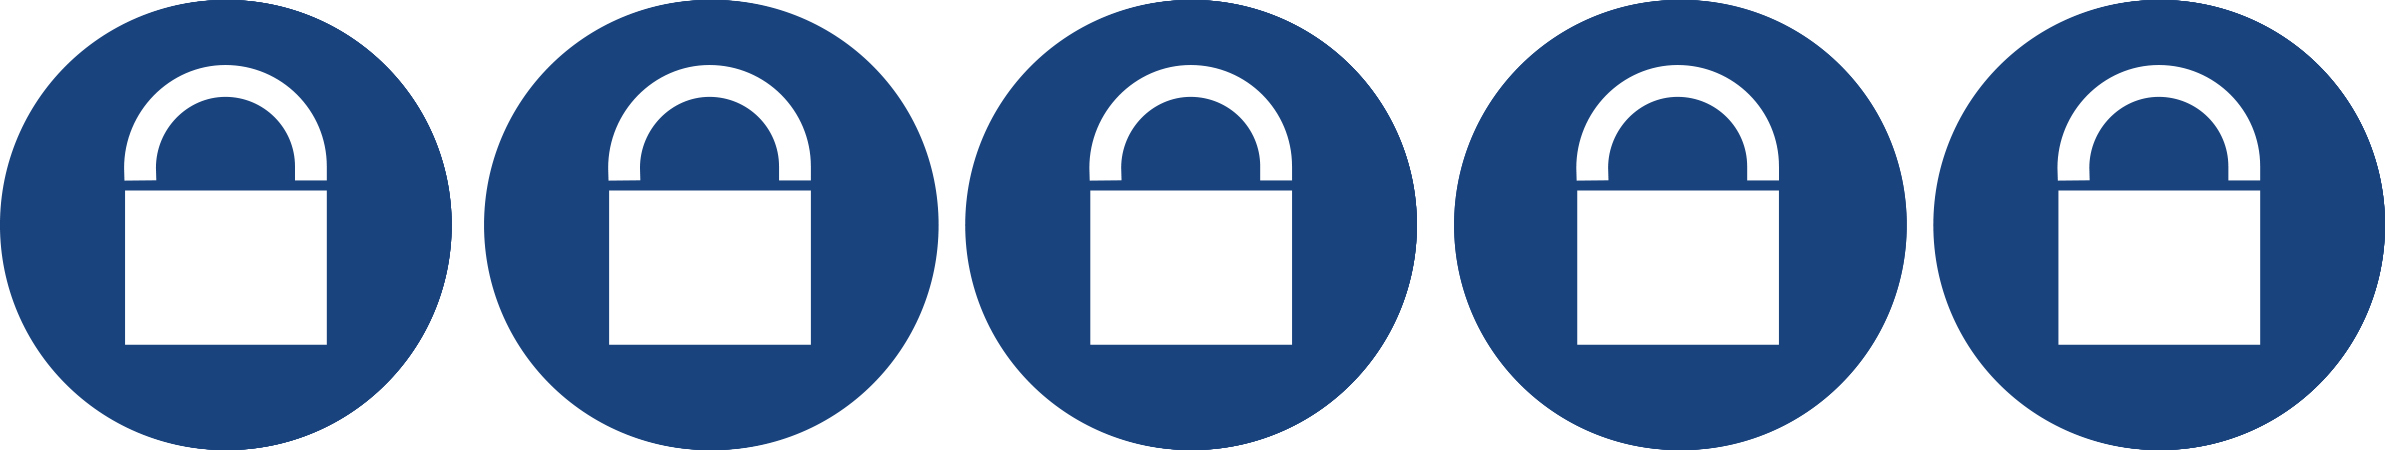 Classificazione di sicurezza Viro https://www.viro.it/files/immagini/2RuoteIT.jpg _blank